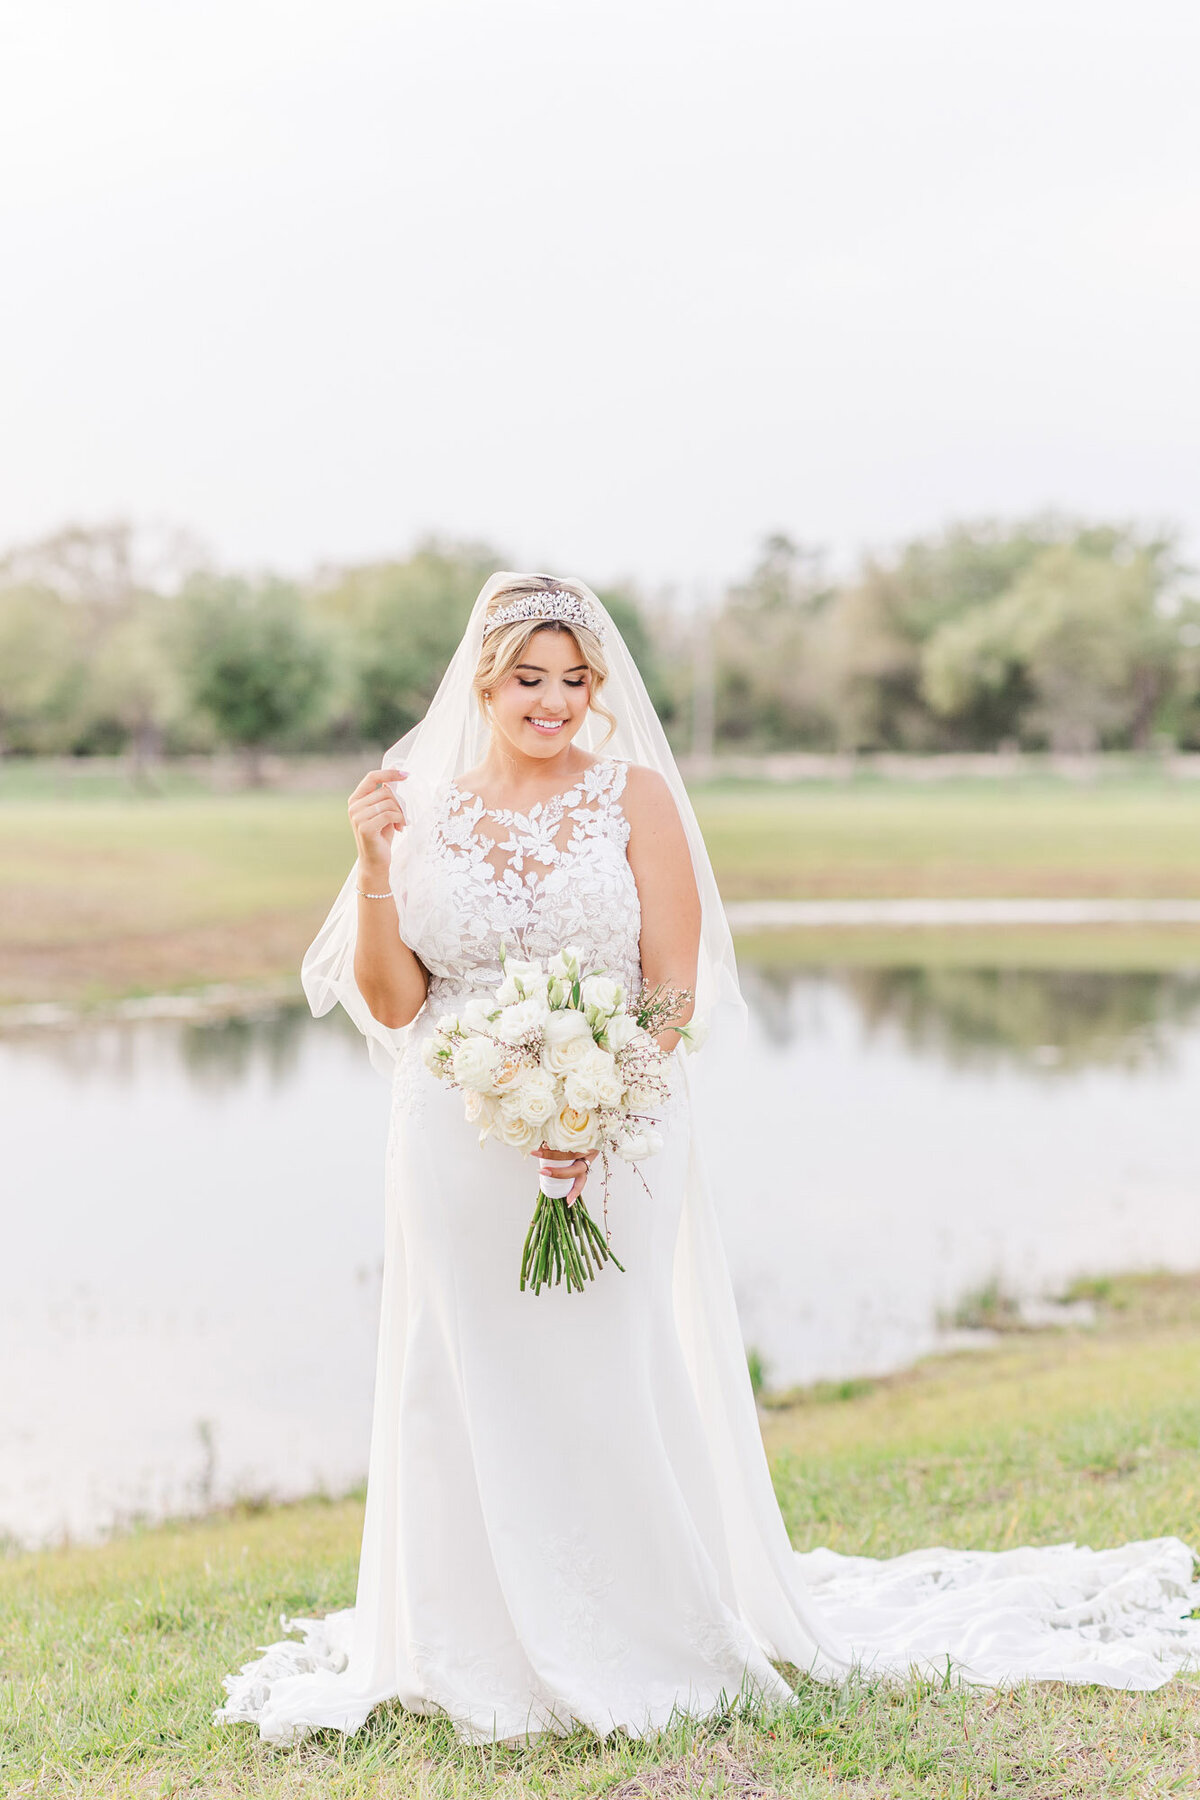 Chloe & Emerson - South Florida Wedding - Deanna Grace Photography -30